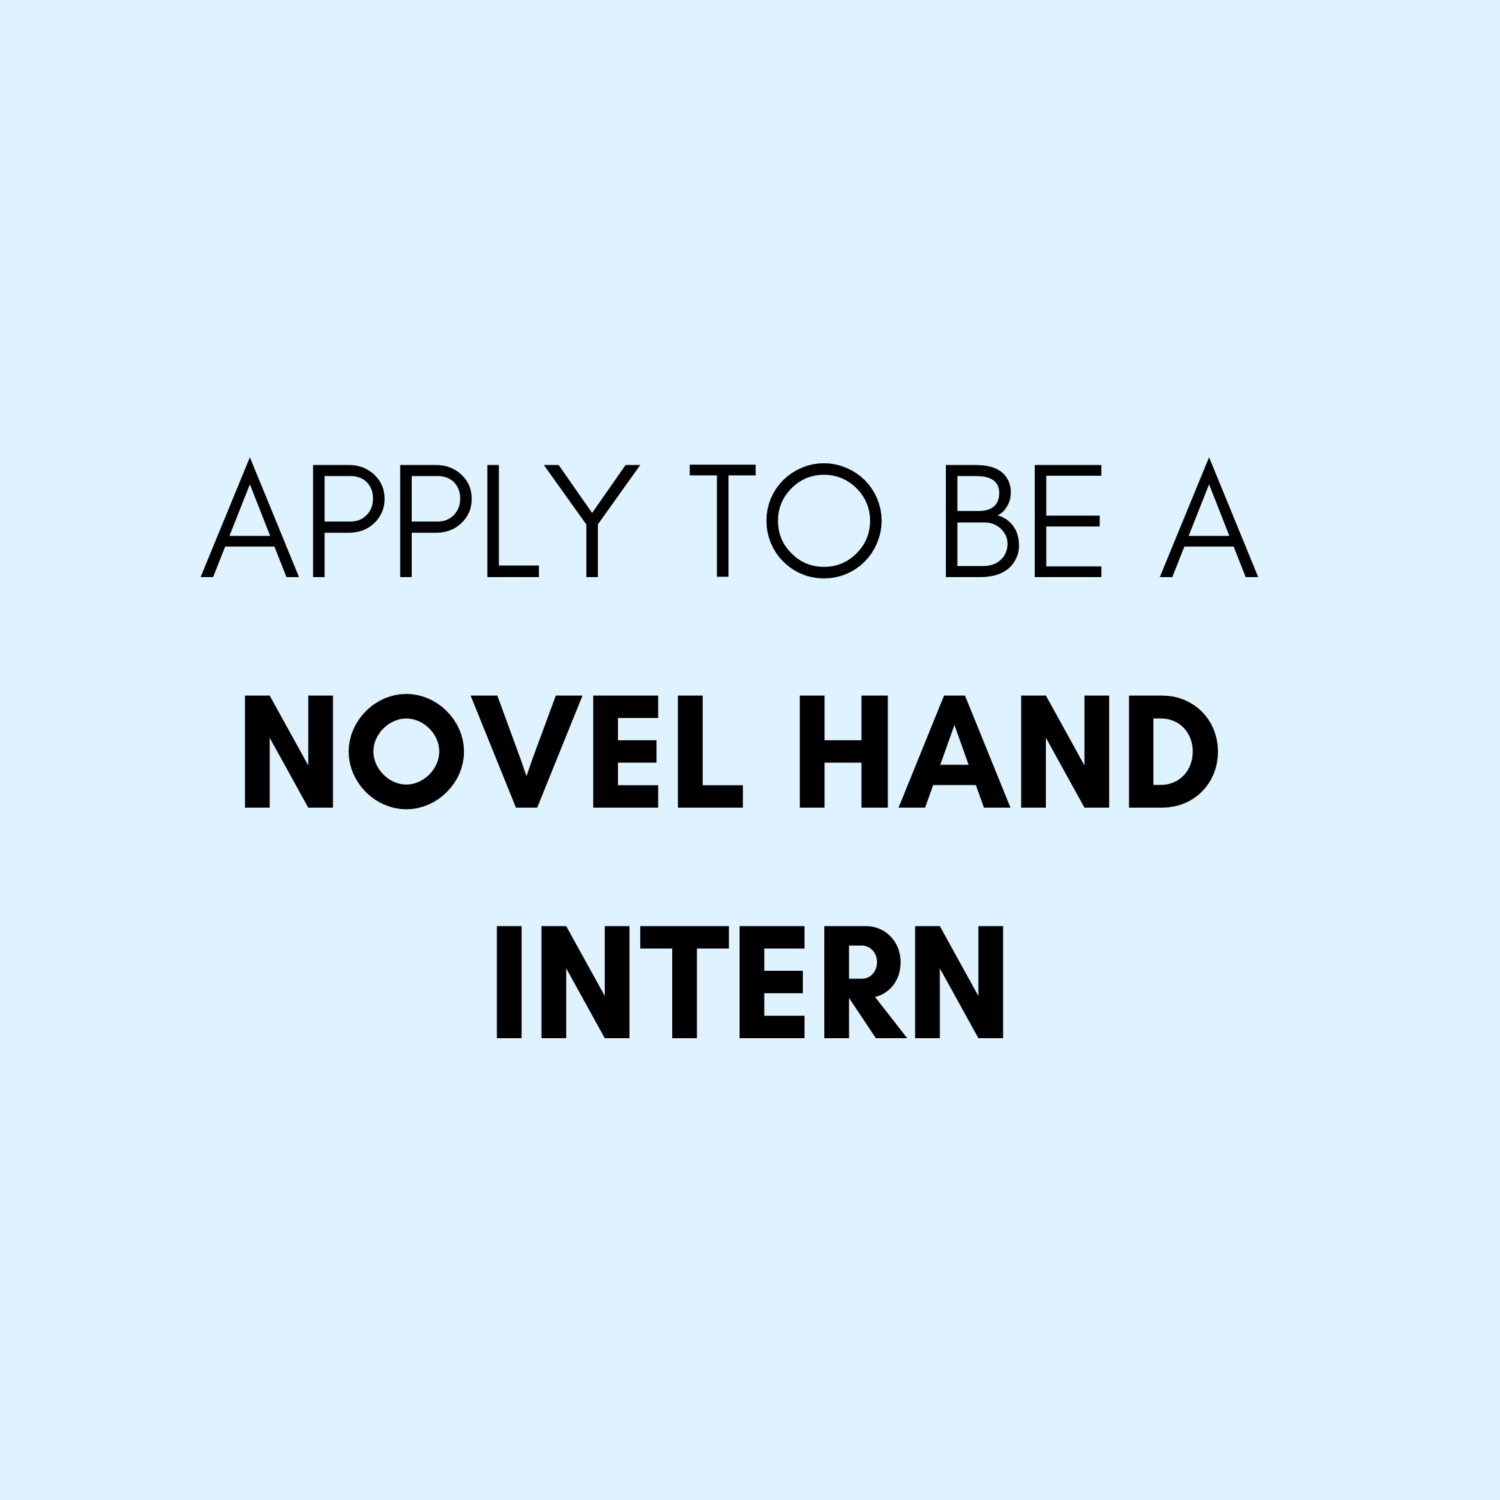 Novel Hand Intern summer 2022 internship